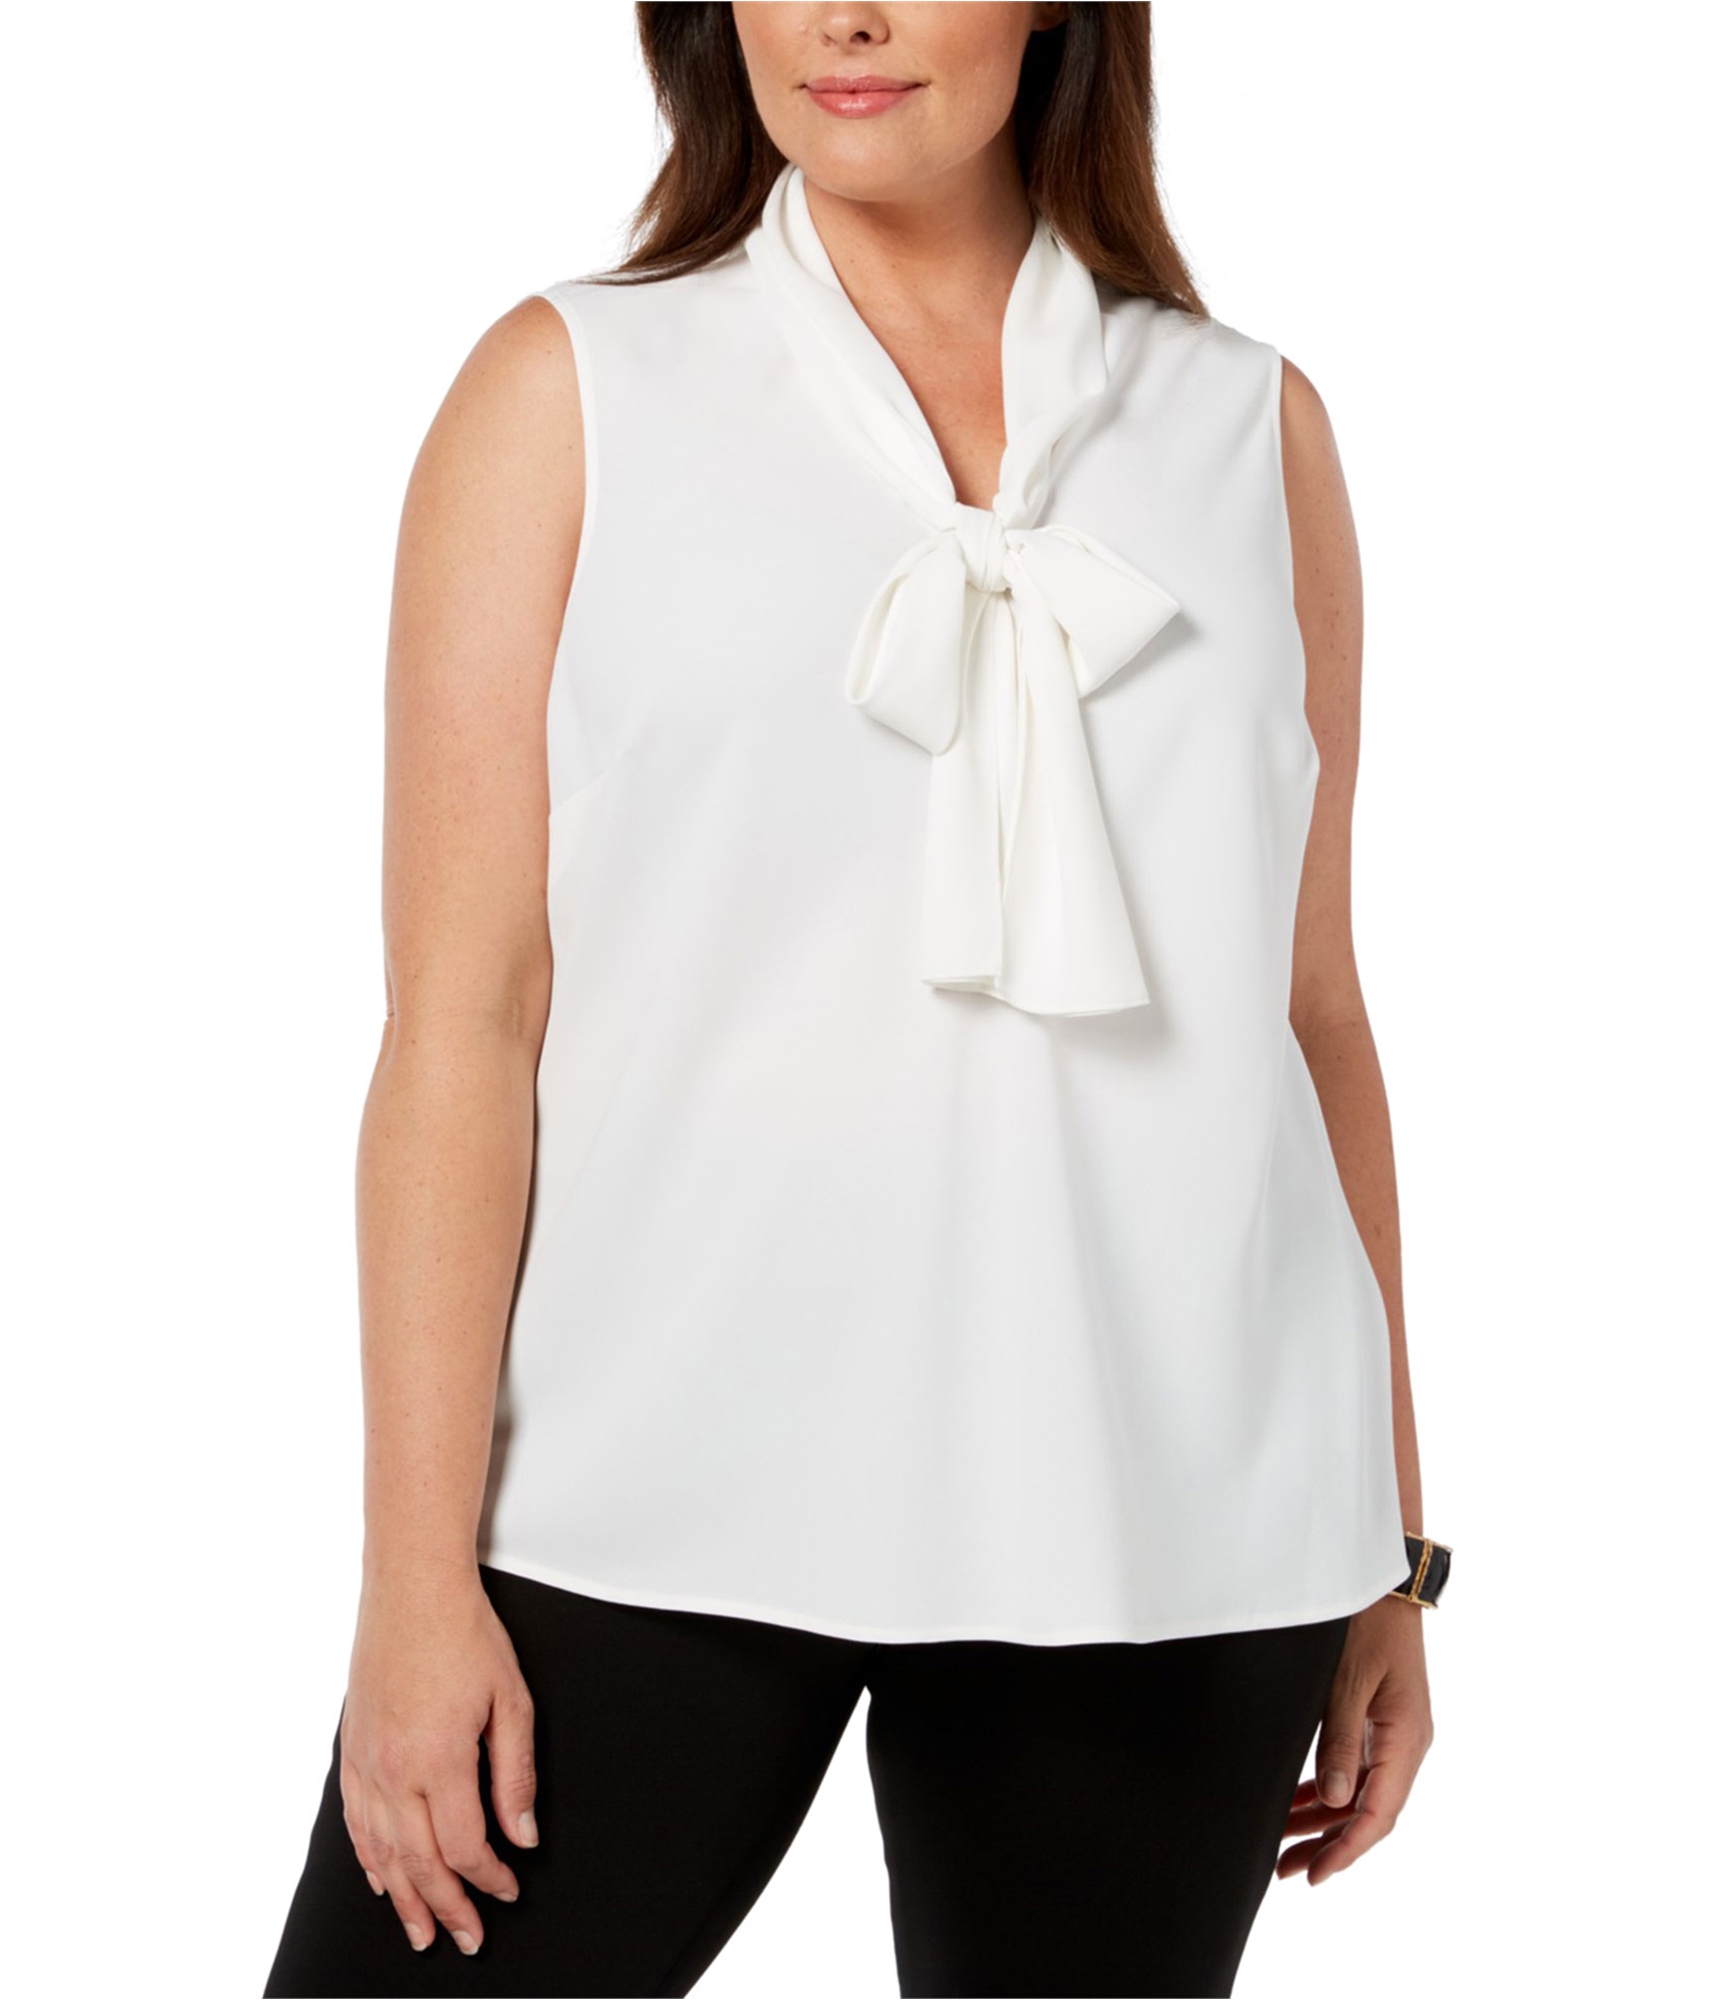 Nine West Womens Tie-Neck Sleeveless Blouse Top, White, 3X | eBay